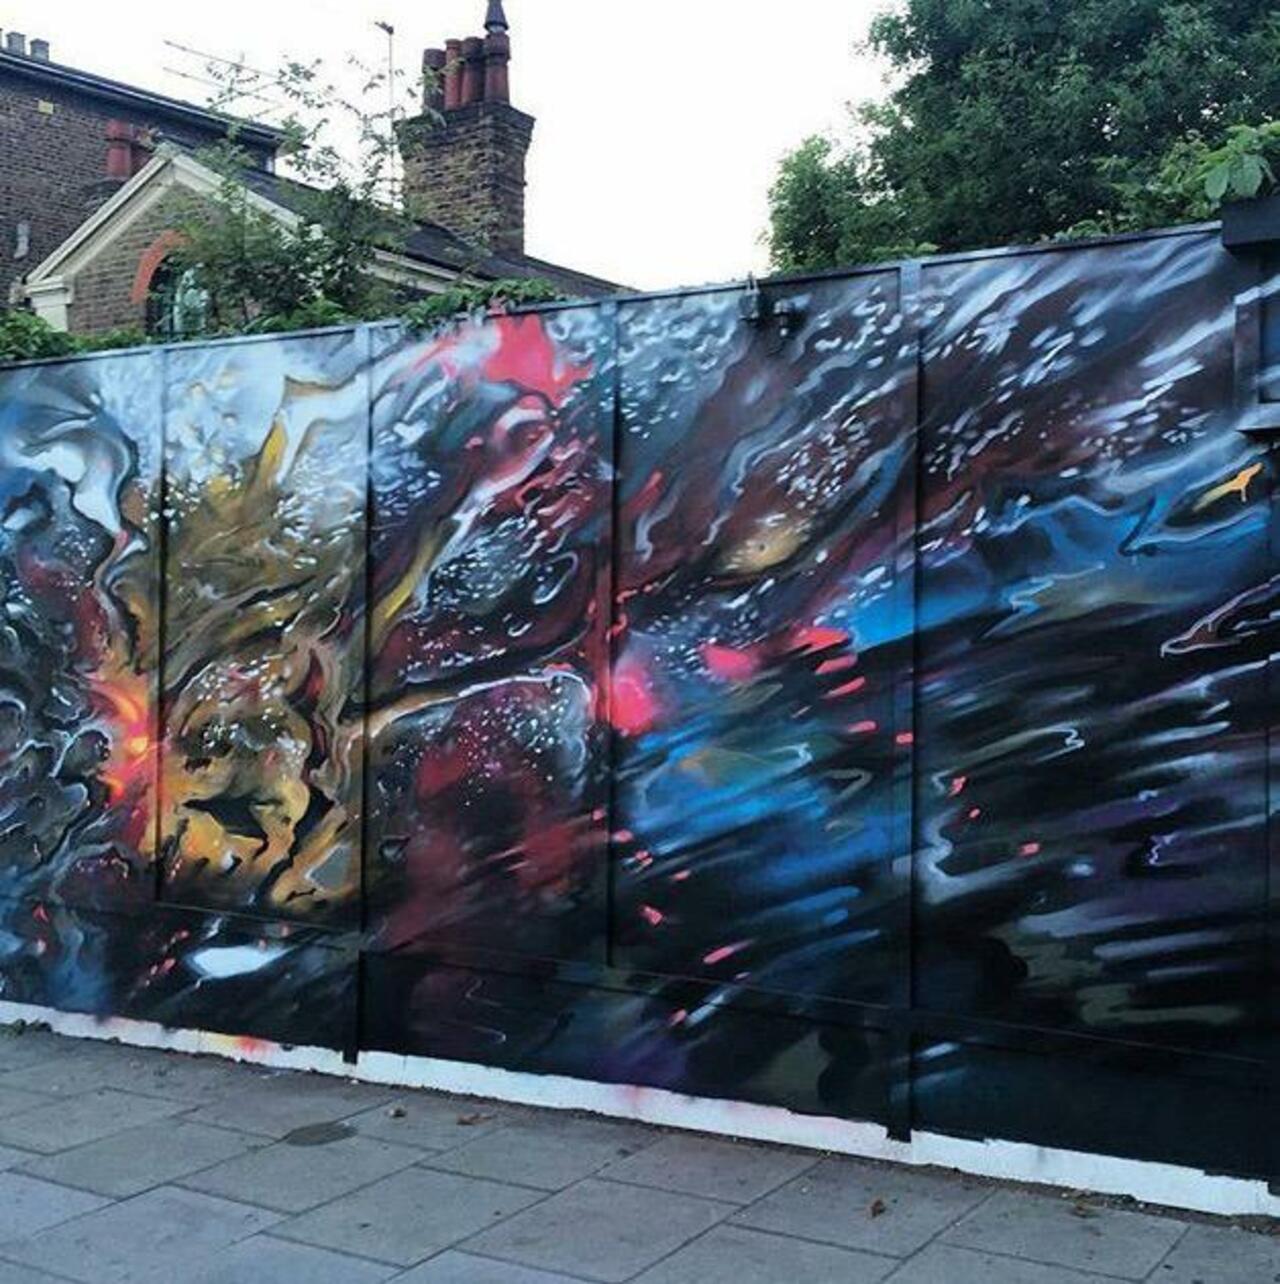 New Street Art by Dan Kitchener in Islington London 

#art #graffiti #arte #streetart http://t.co/mfKRBHkOre